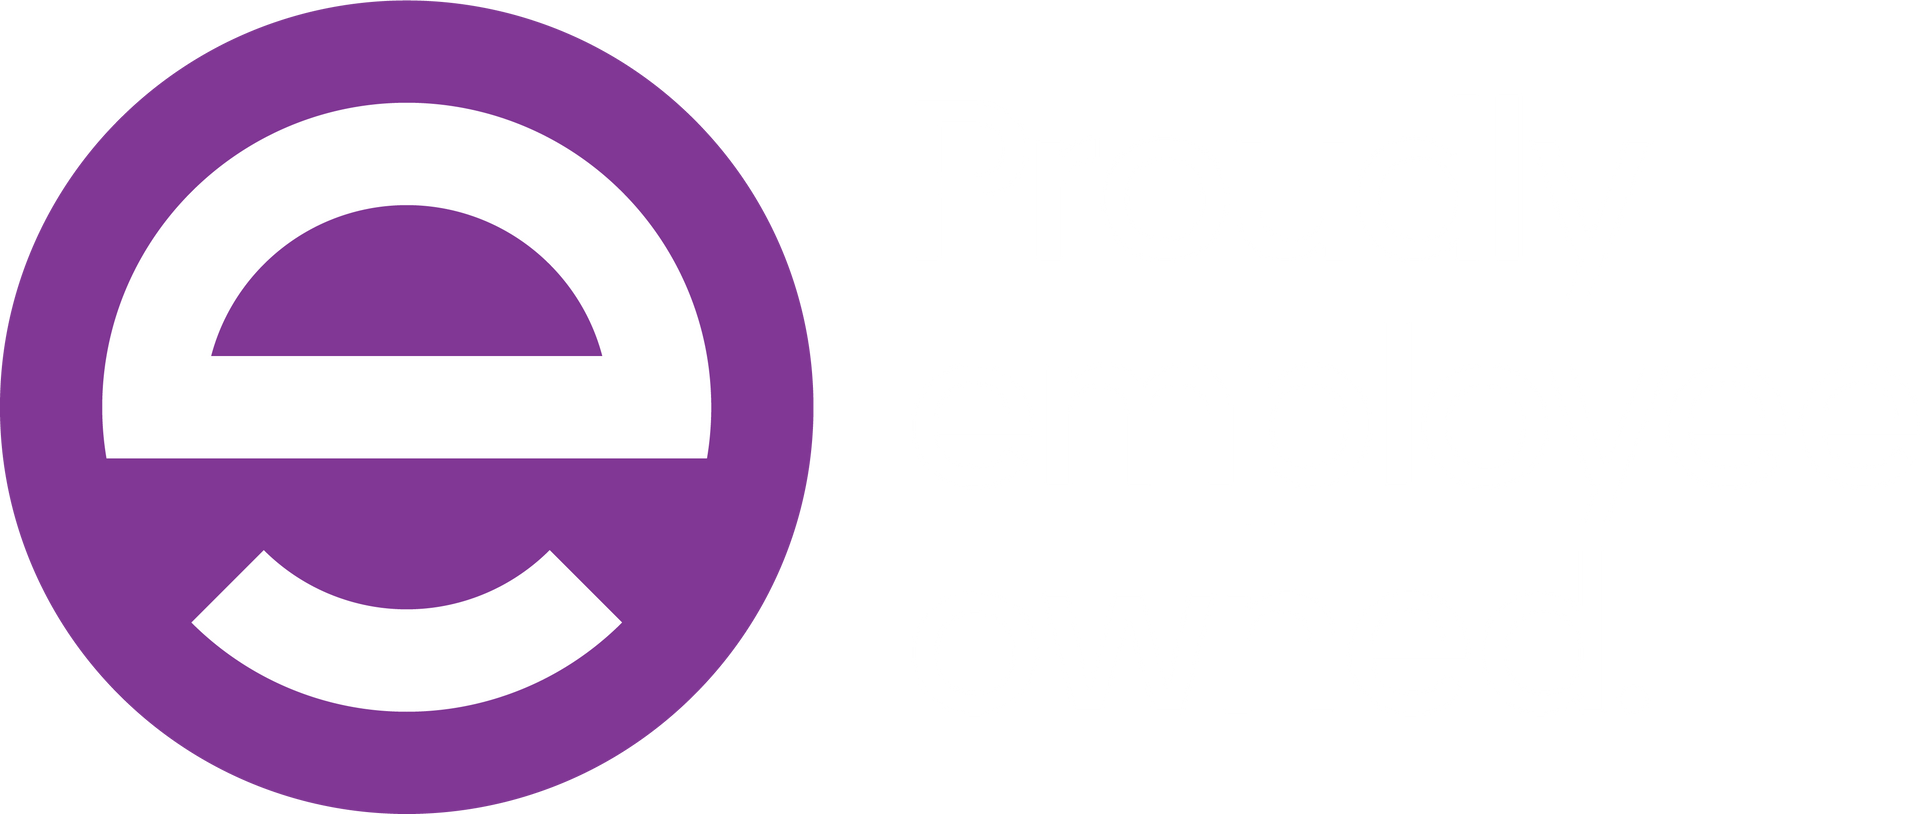 Proudly employee owned logo